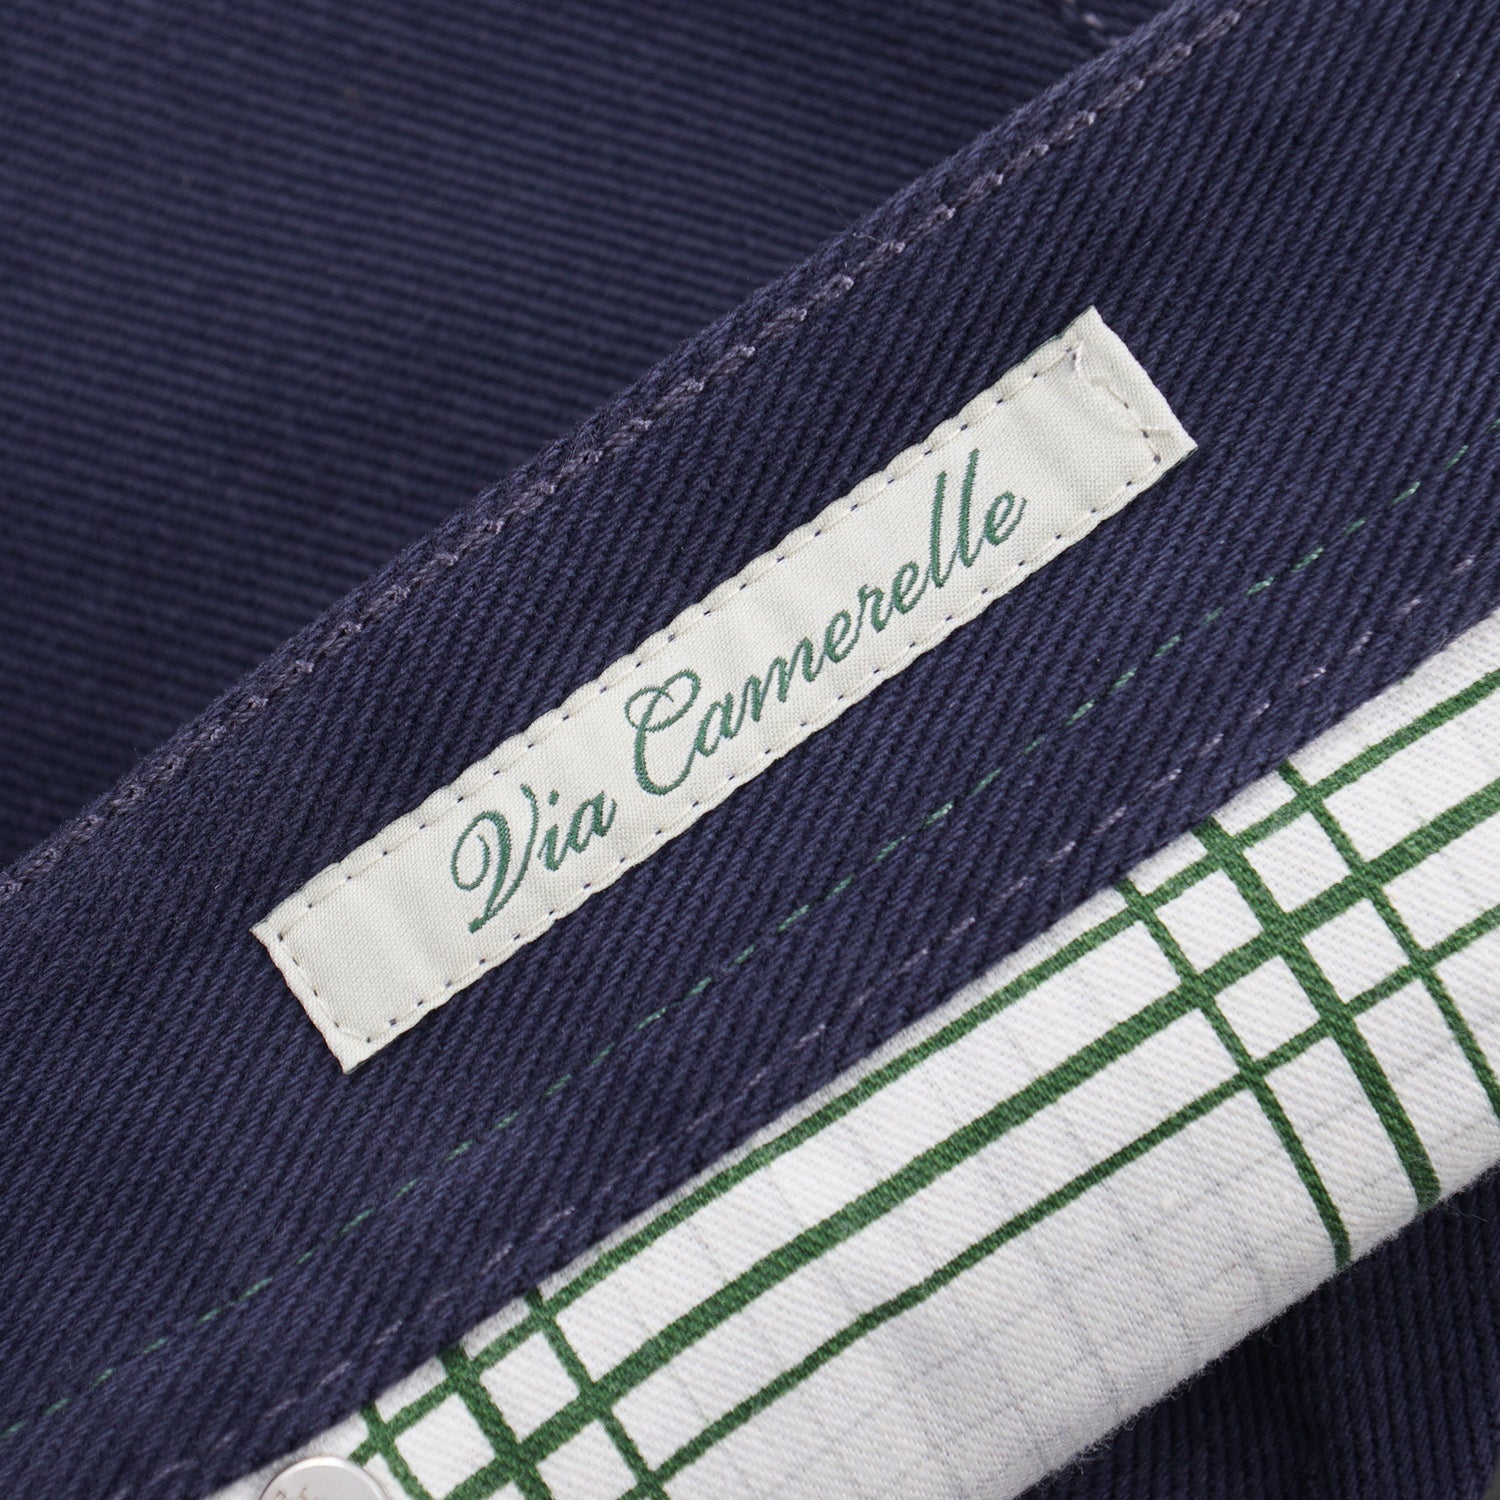 Luigi Borrelli Slim-Fit Soft Twill Jeans - Top Shelf Apparel